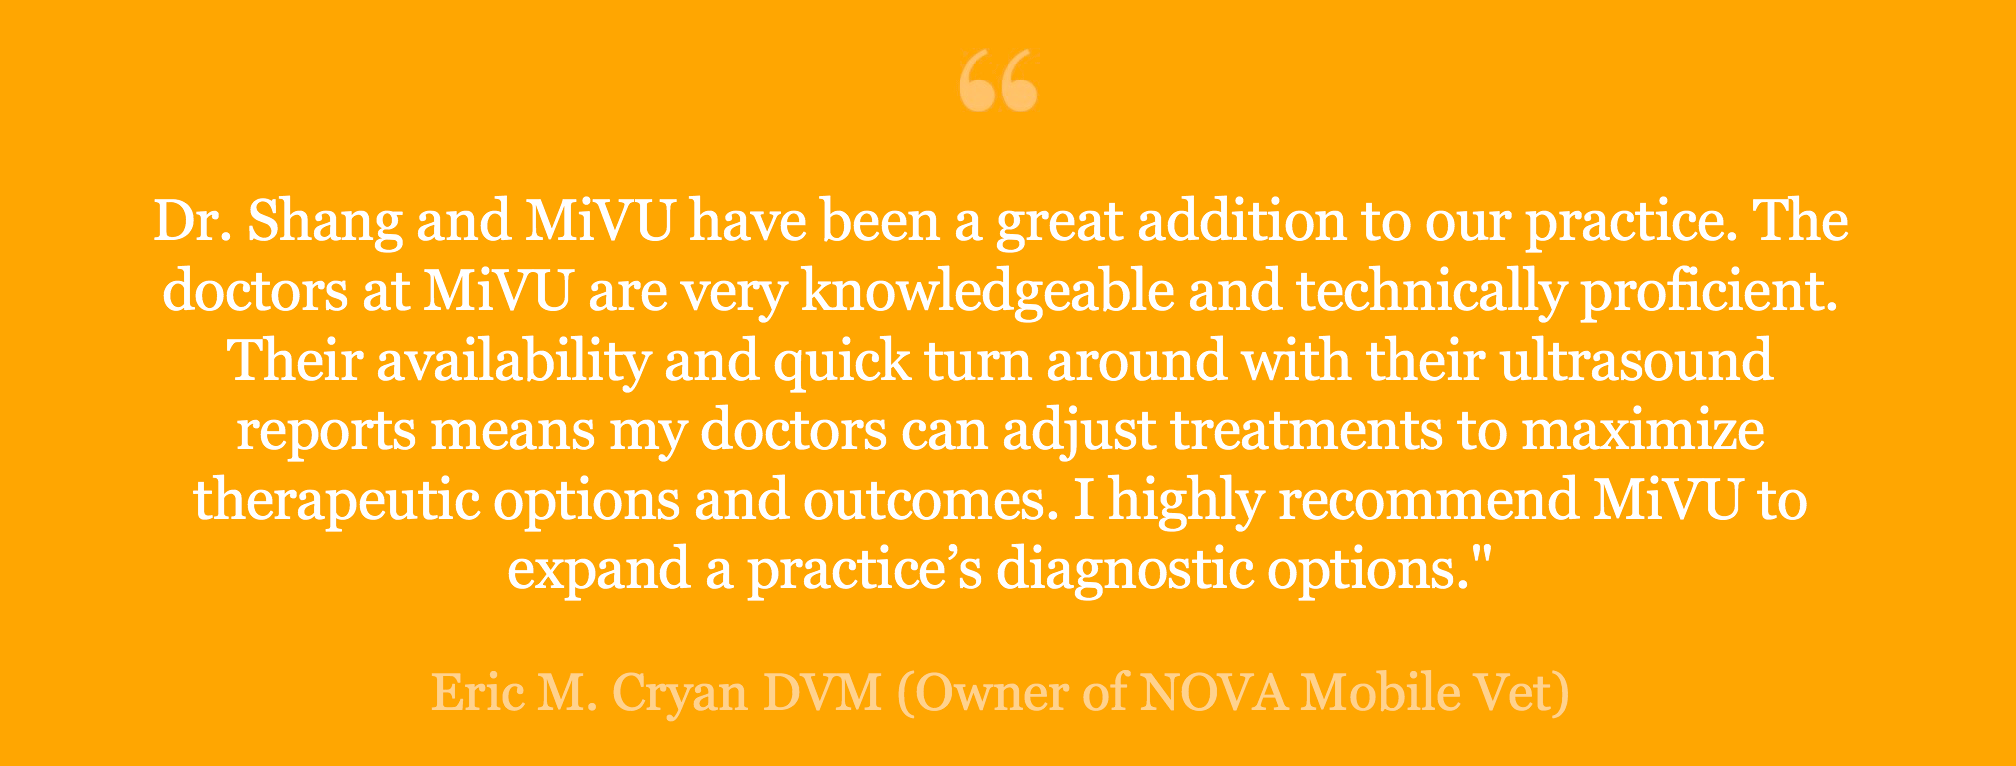 Eric M. Cryan DVM (Owner of NOVA Mobile Vet.) (Copy)